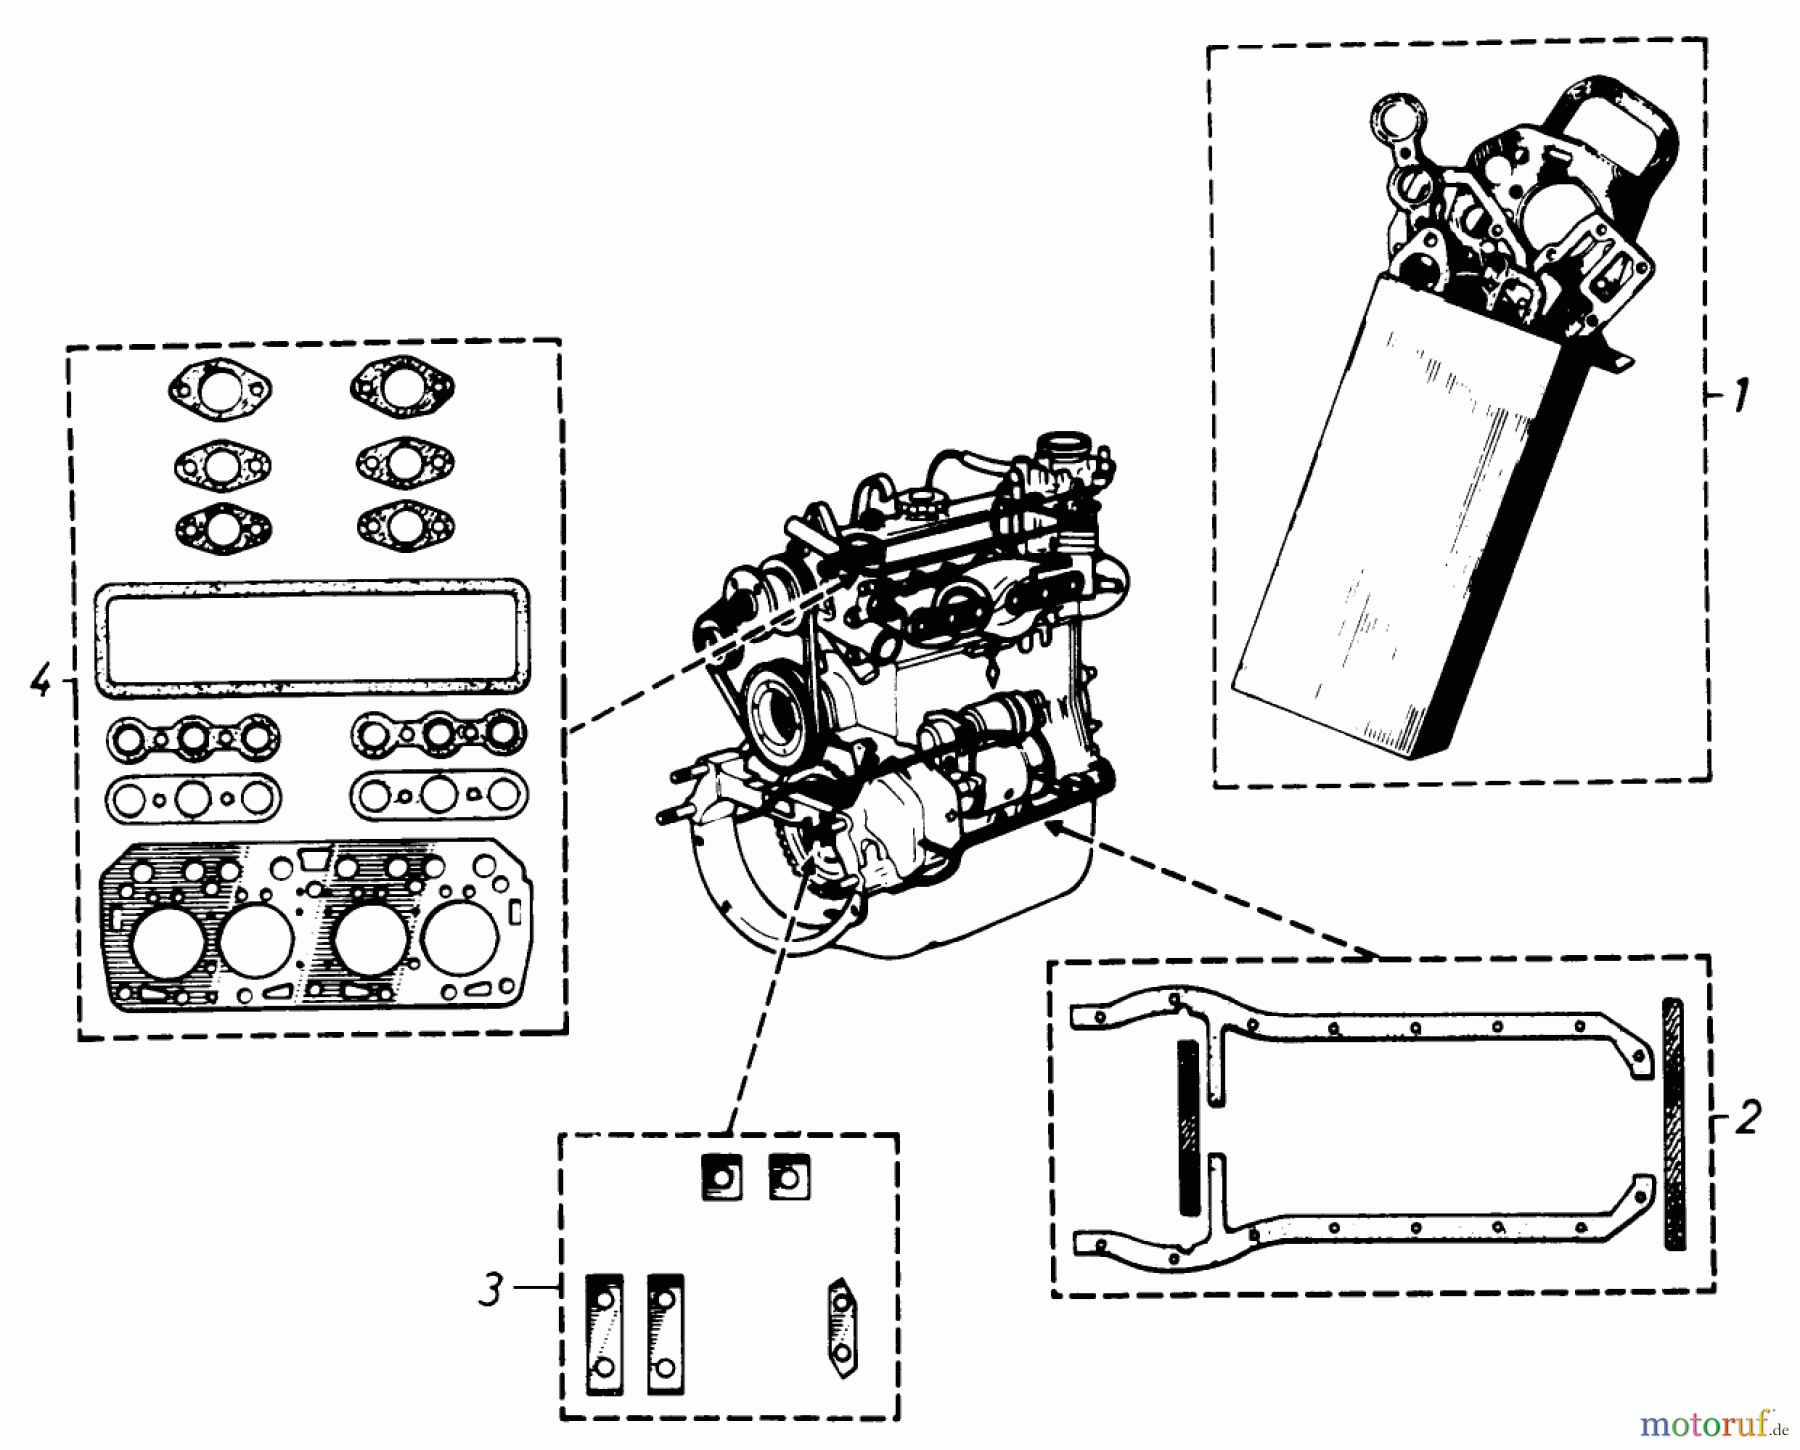  Toro Neu Mowers, Lawn & Garden Tractor Seite 1 61-20RG01 (D-250) - Toro D-250 10-Speed Tractor, 1976 GASKET SETS